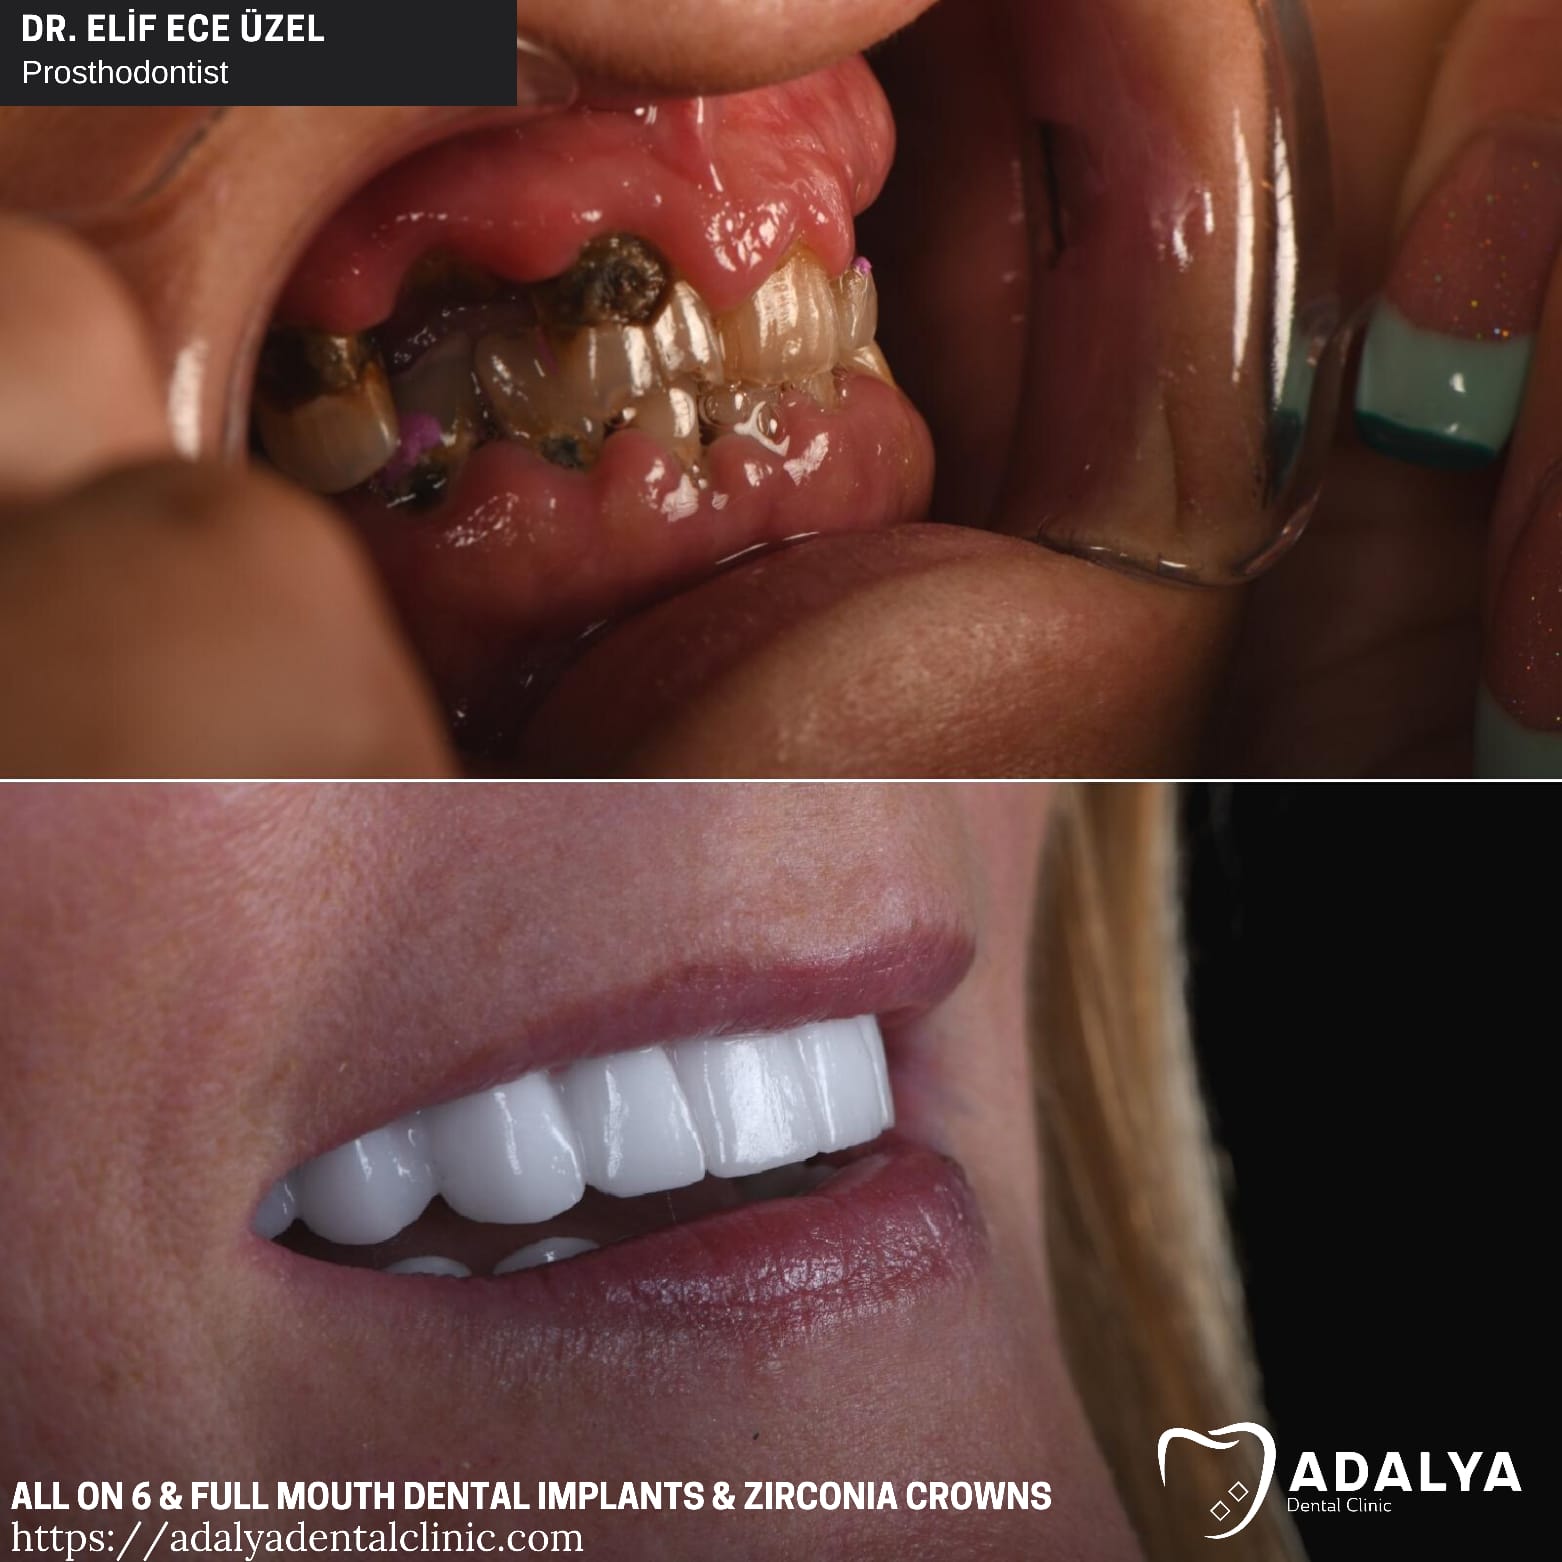 adalya full mouth dental implants package deals antalya